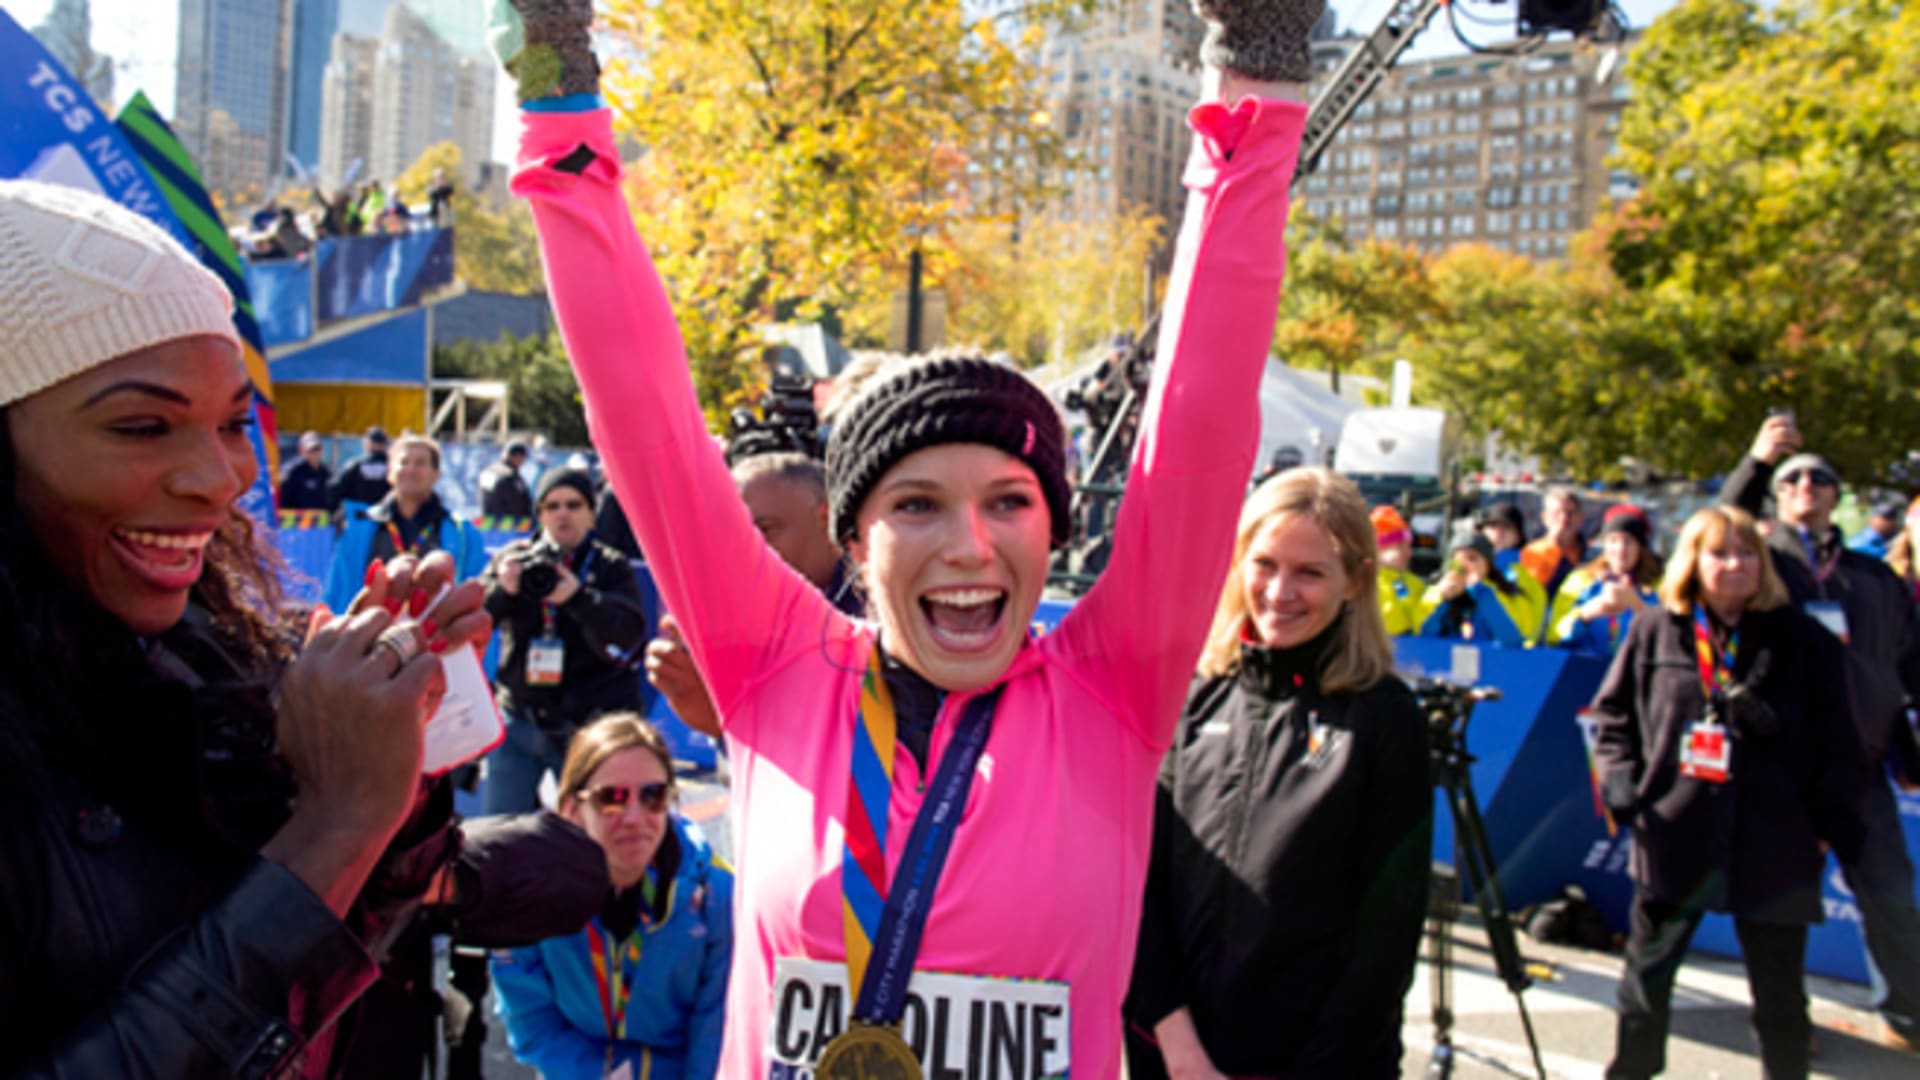 VIDEO: Caroline Wozniacki at the New York City Marathon line